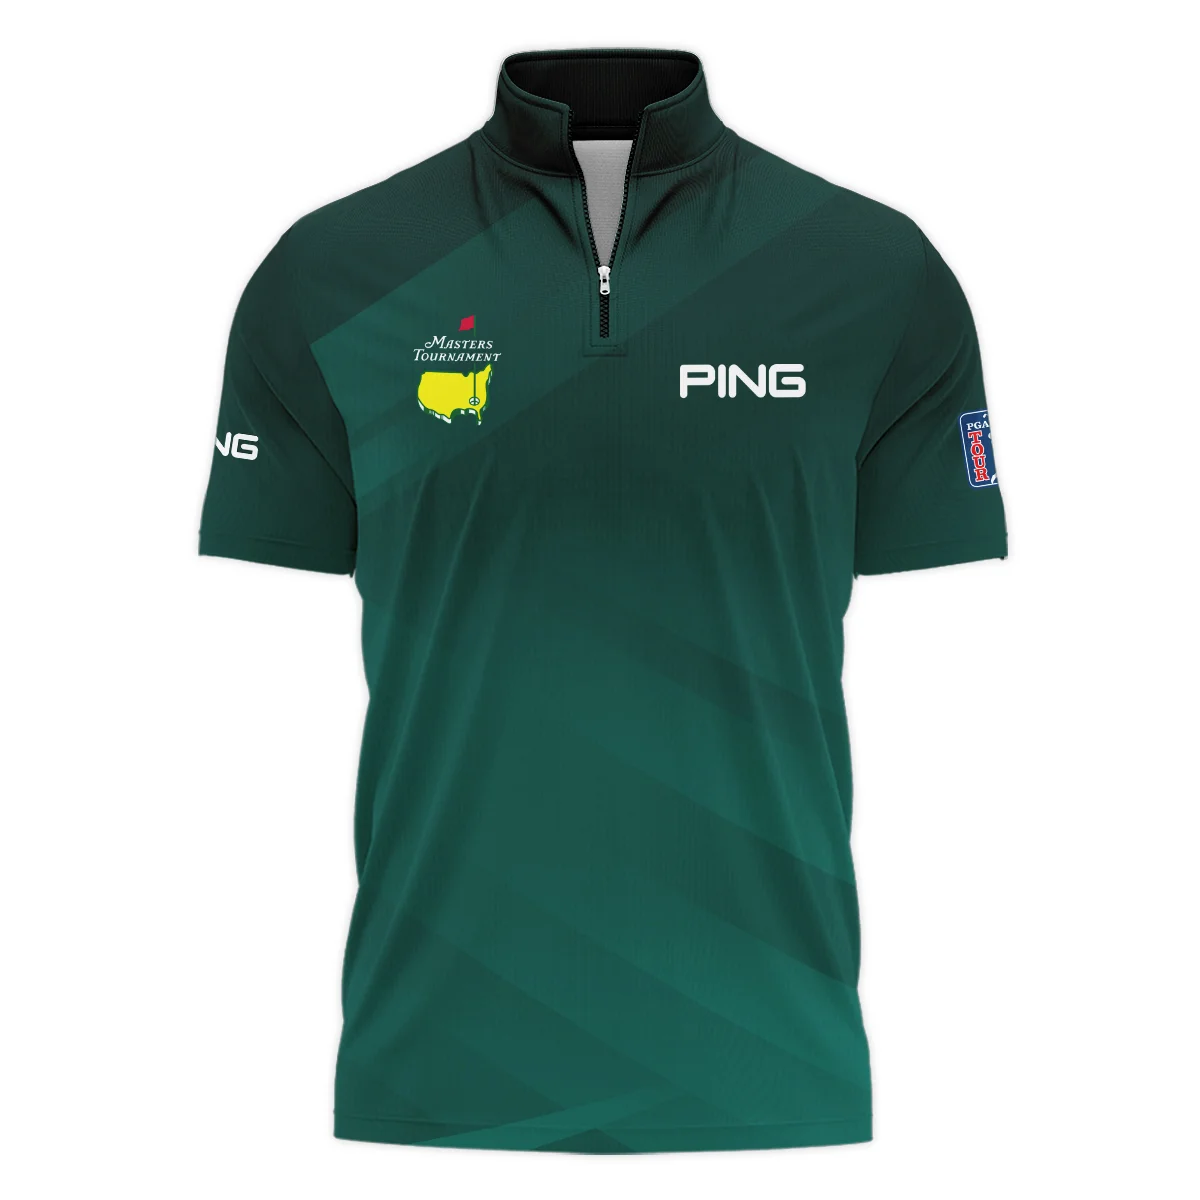 Masters Tournament Dark Green Gradient Golf Sport Ping Zipper Polo Shirt Style Classic Zipper Polo Shirt For Men